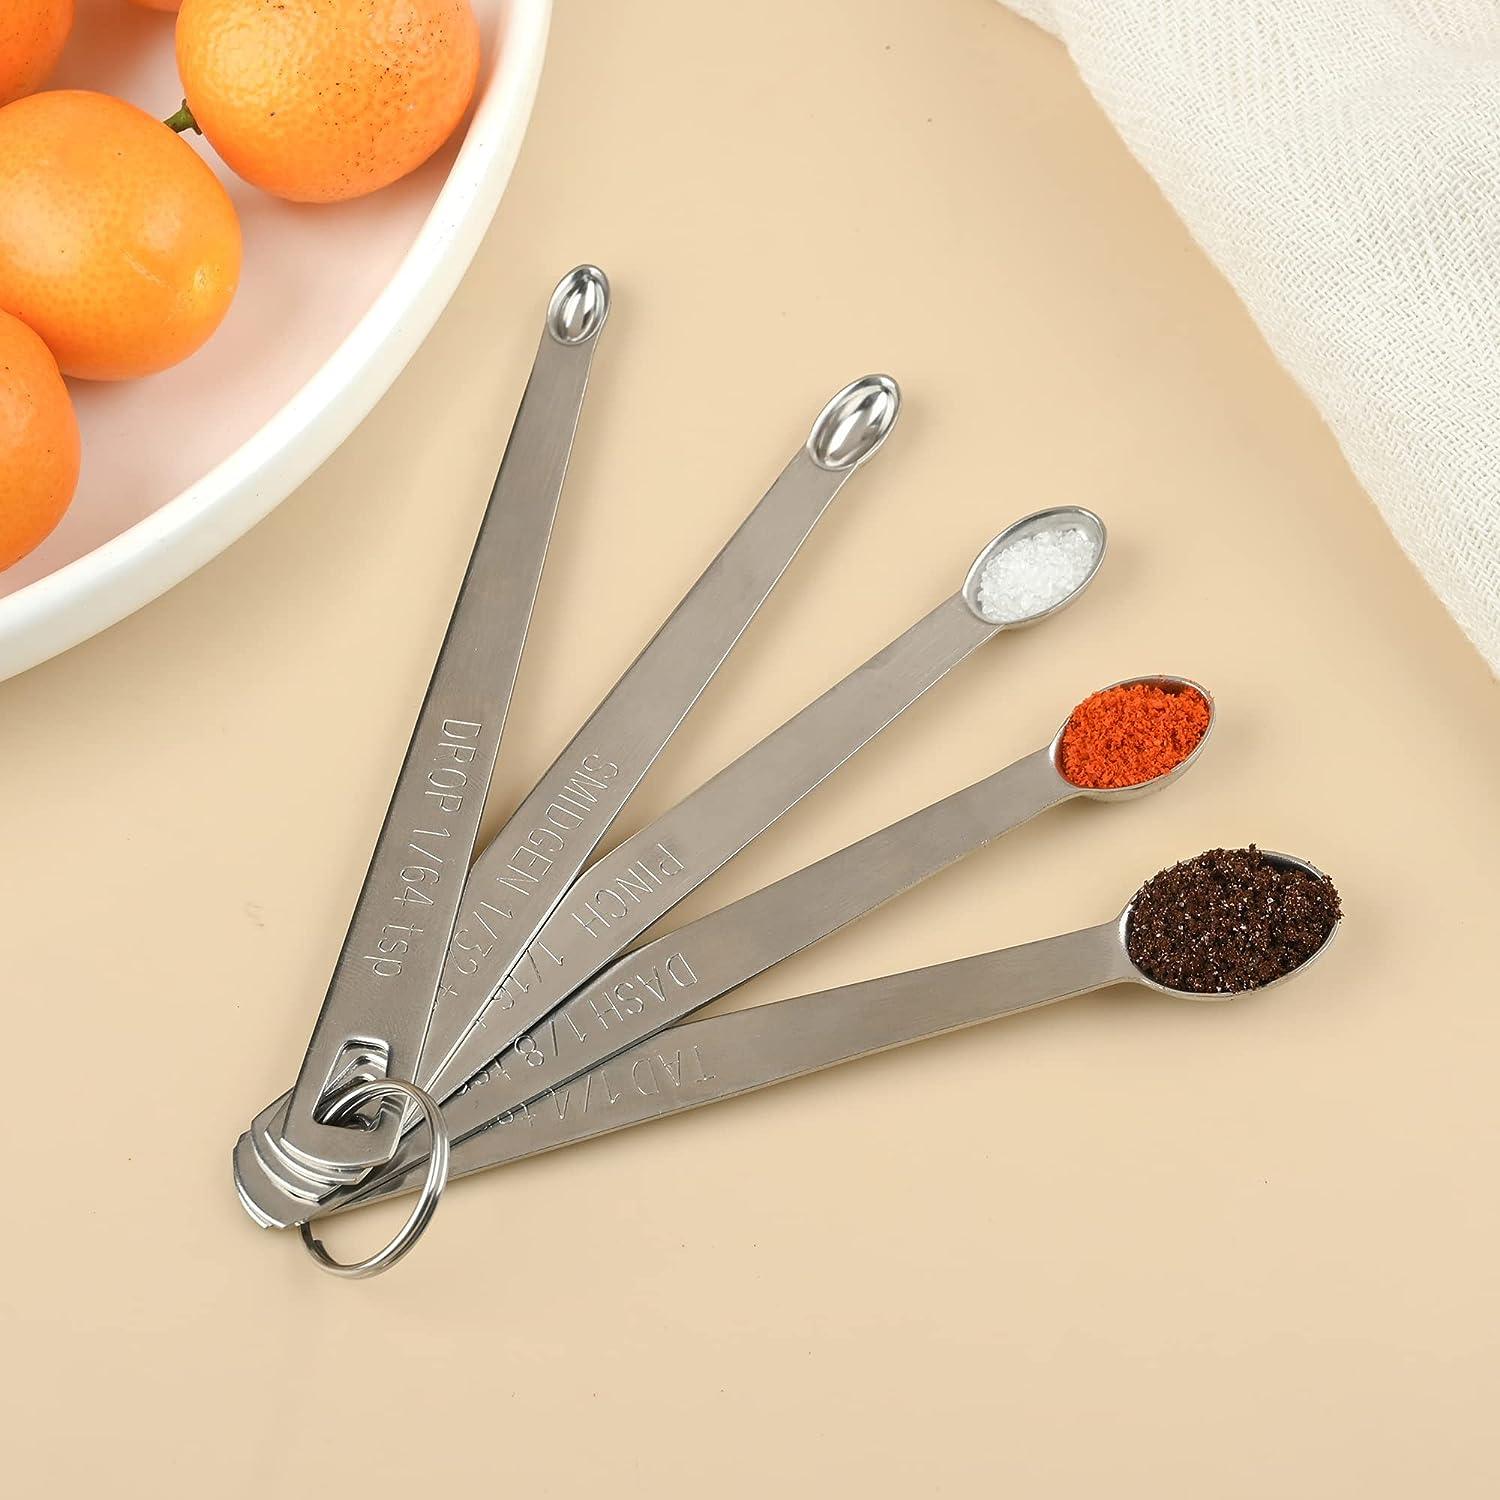 Mini Stainless Steel Teaspoon Measuring Spoon Set (1/4, 1/8, 1/16, 1/32, 1/64) - Anjelstore 